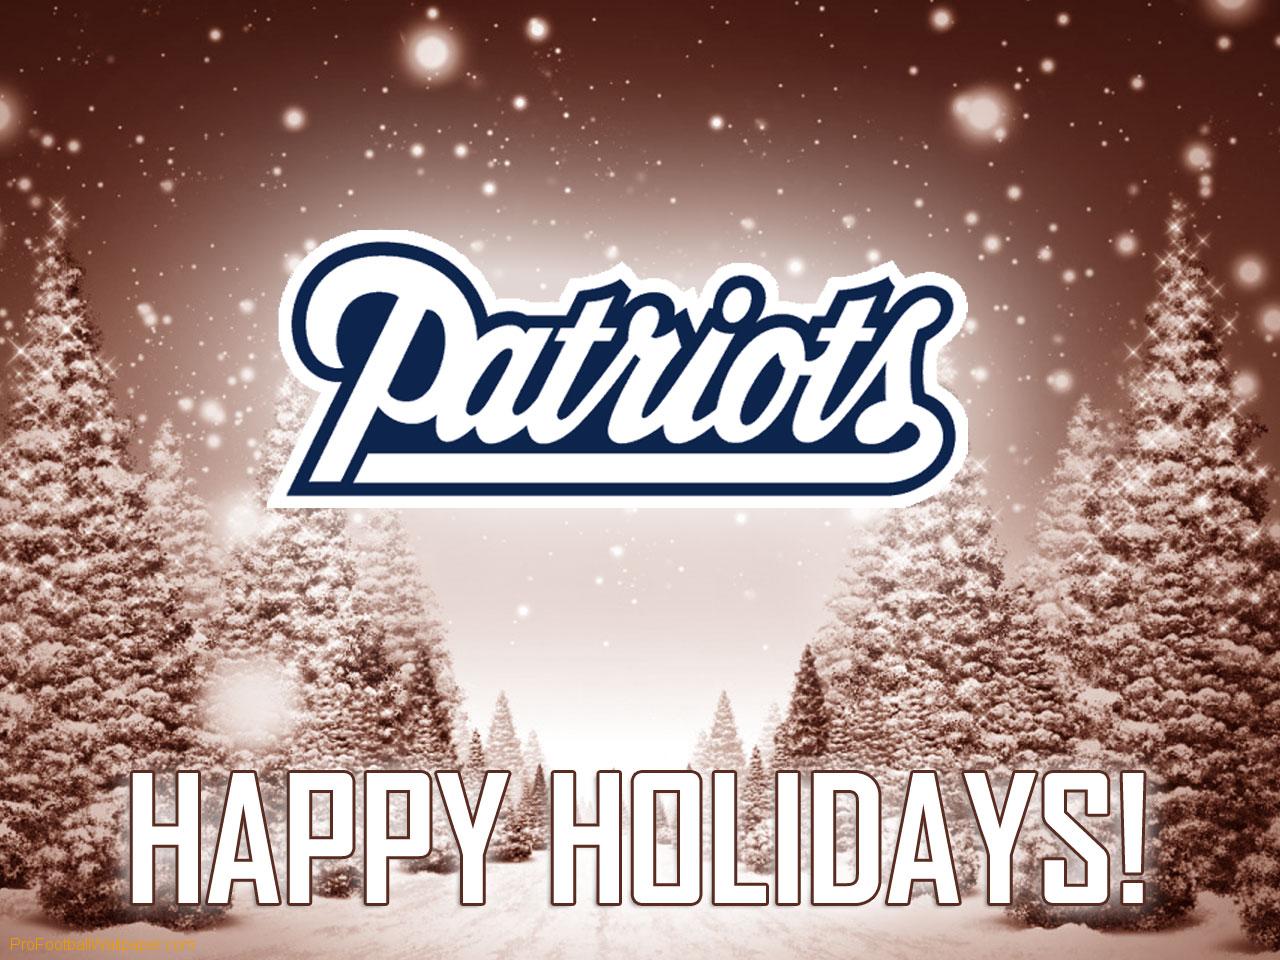 Download Happy Holidays wallpaper New England Patriots Holidays